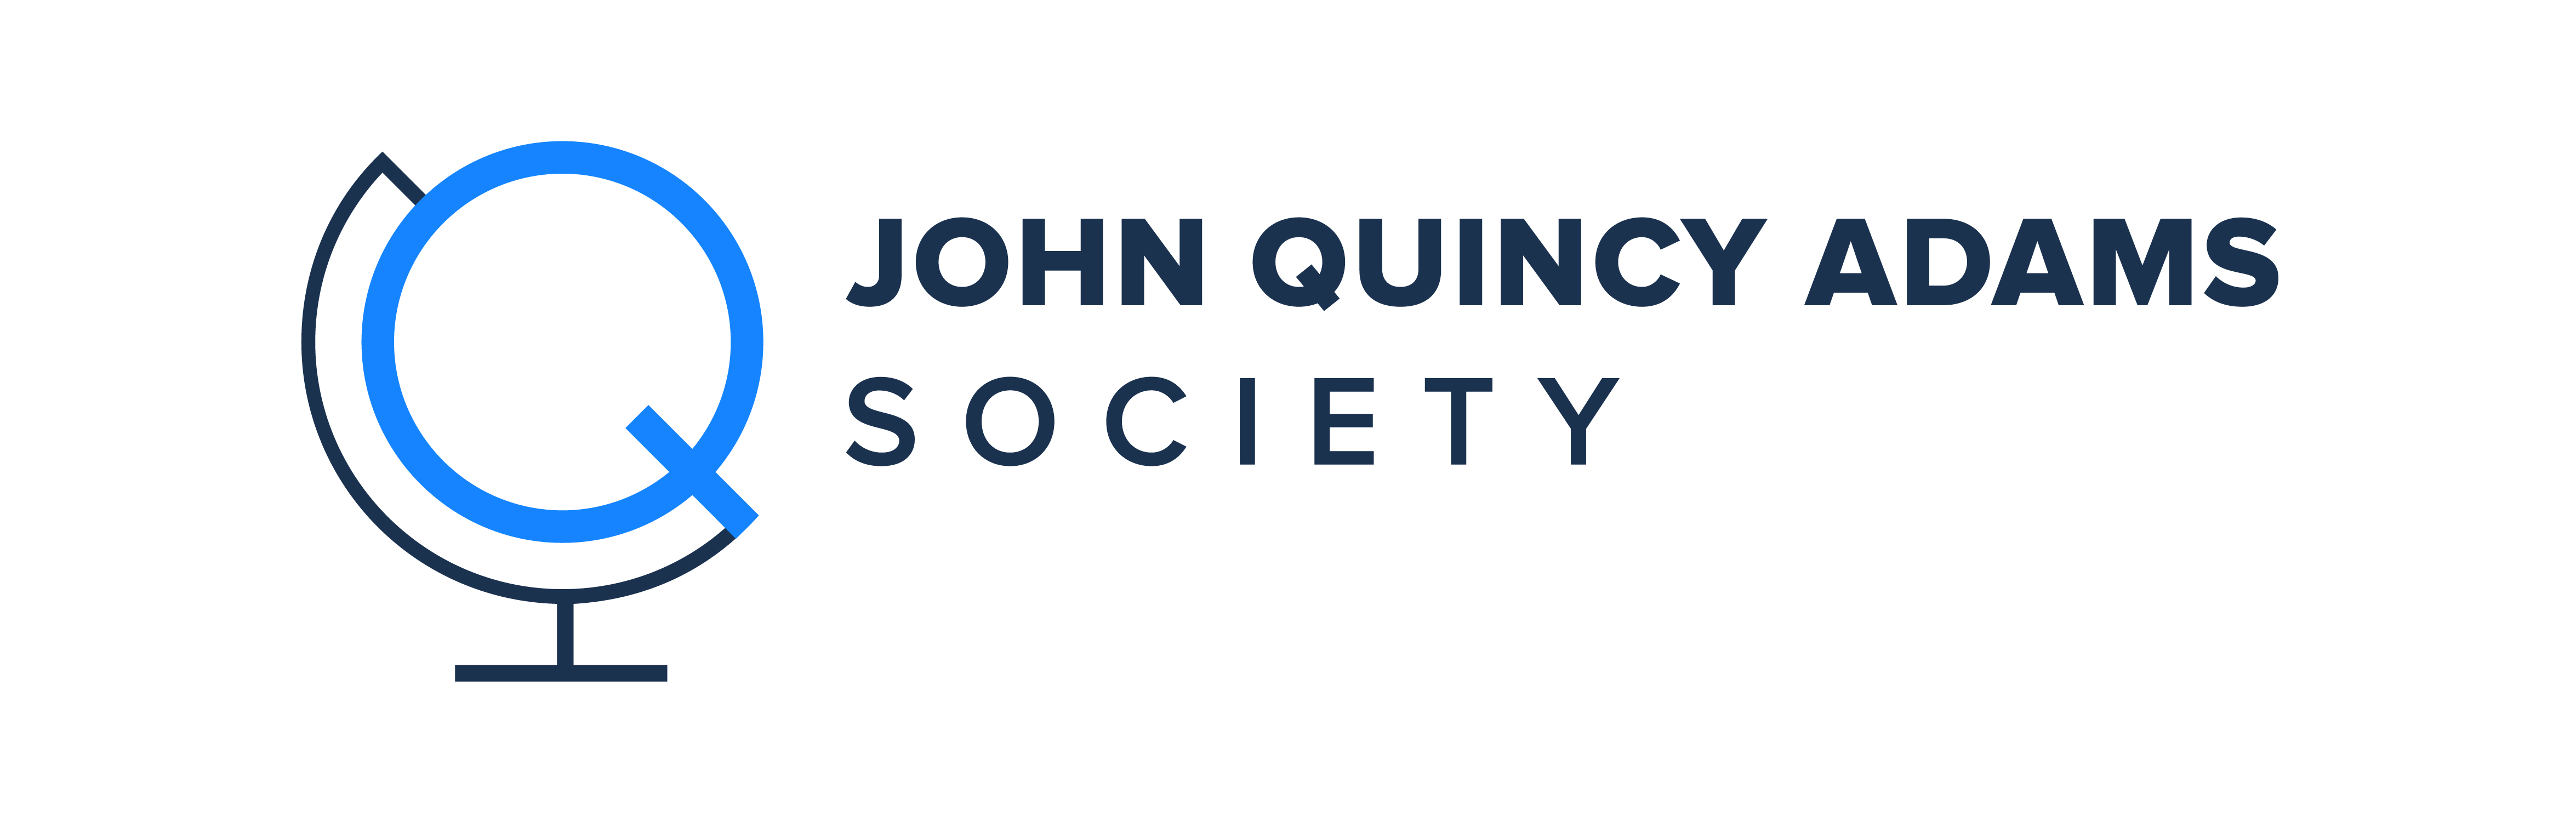 The John Quincy Adams Society logo